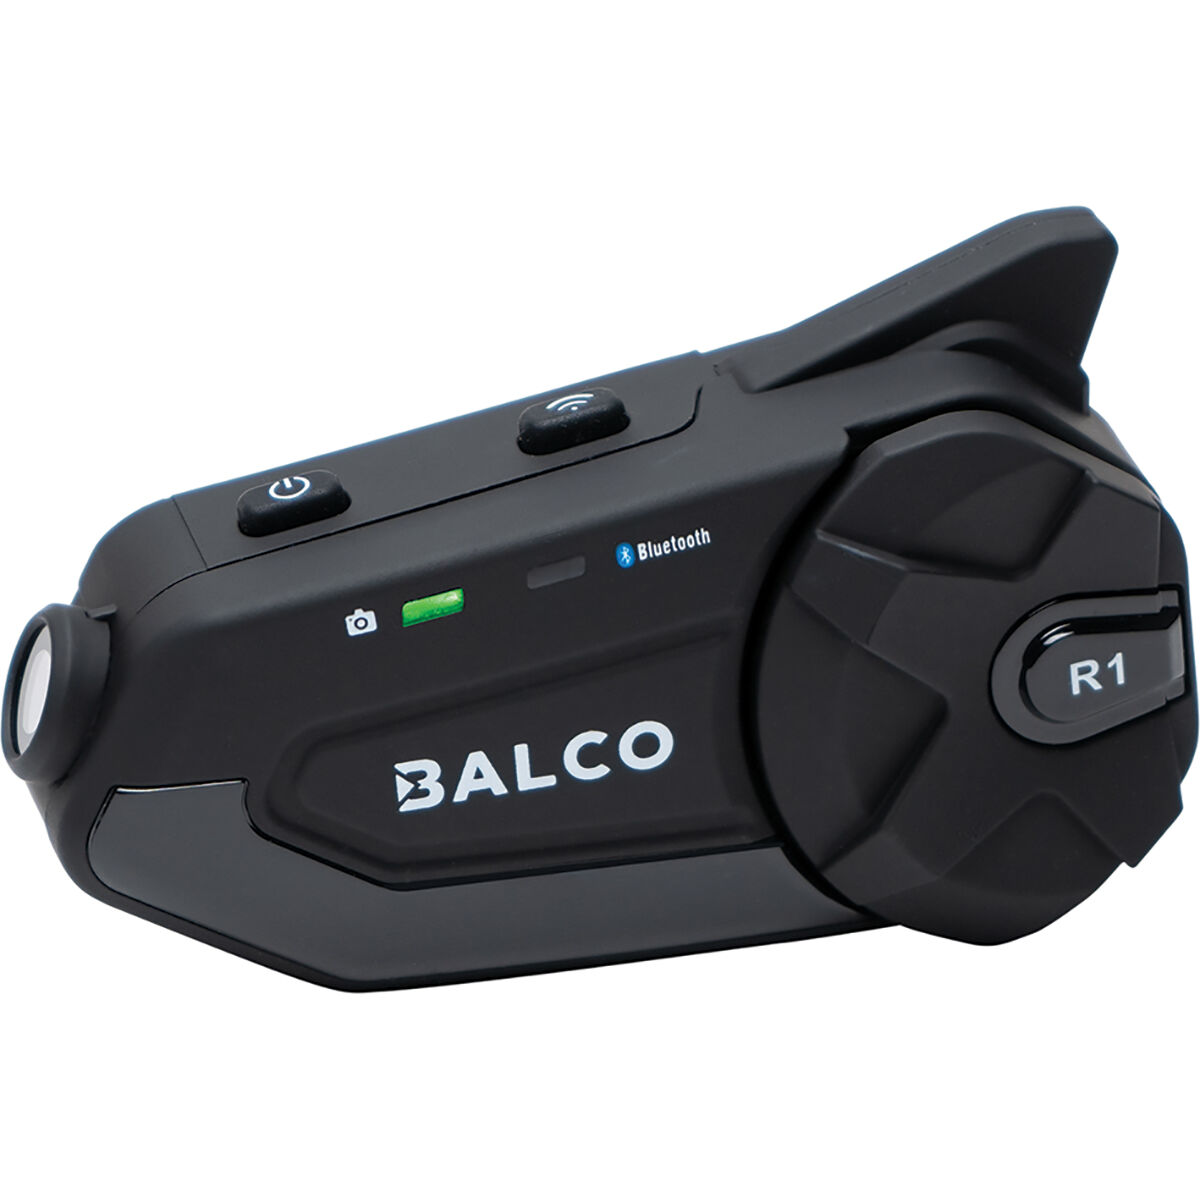 Motorcycle Bluetooth Kit - Signify Electronics Australia